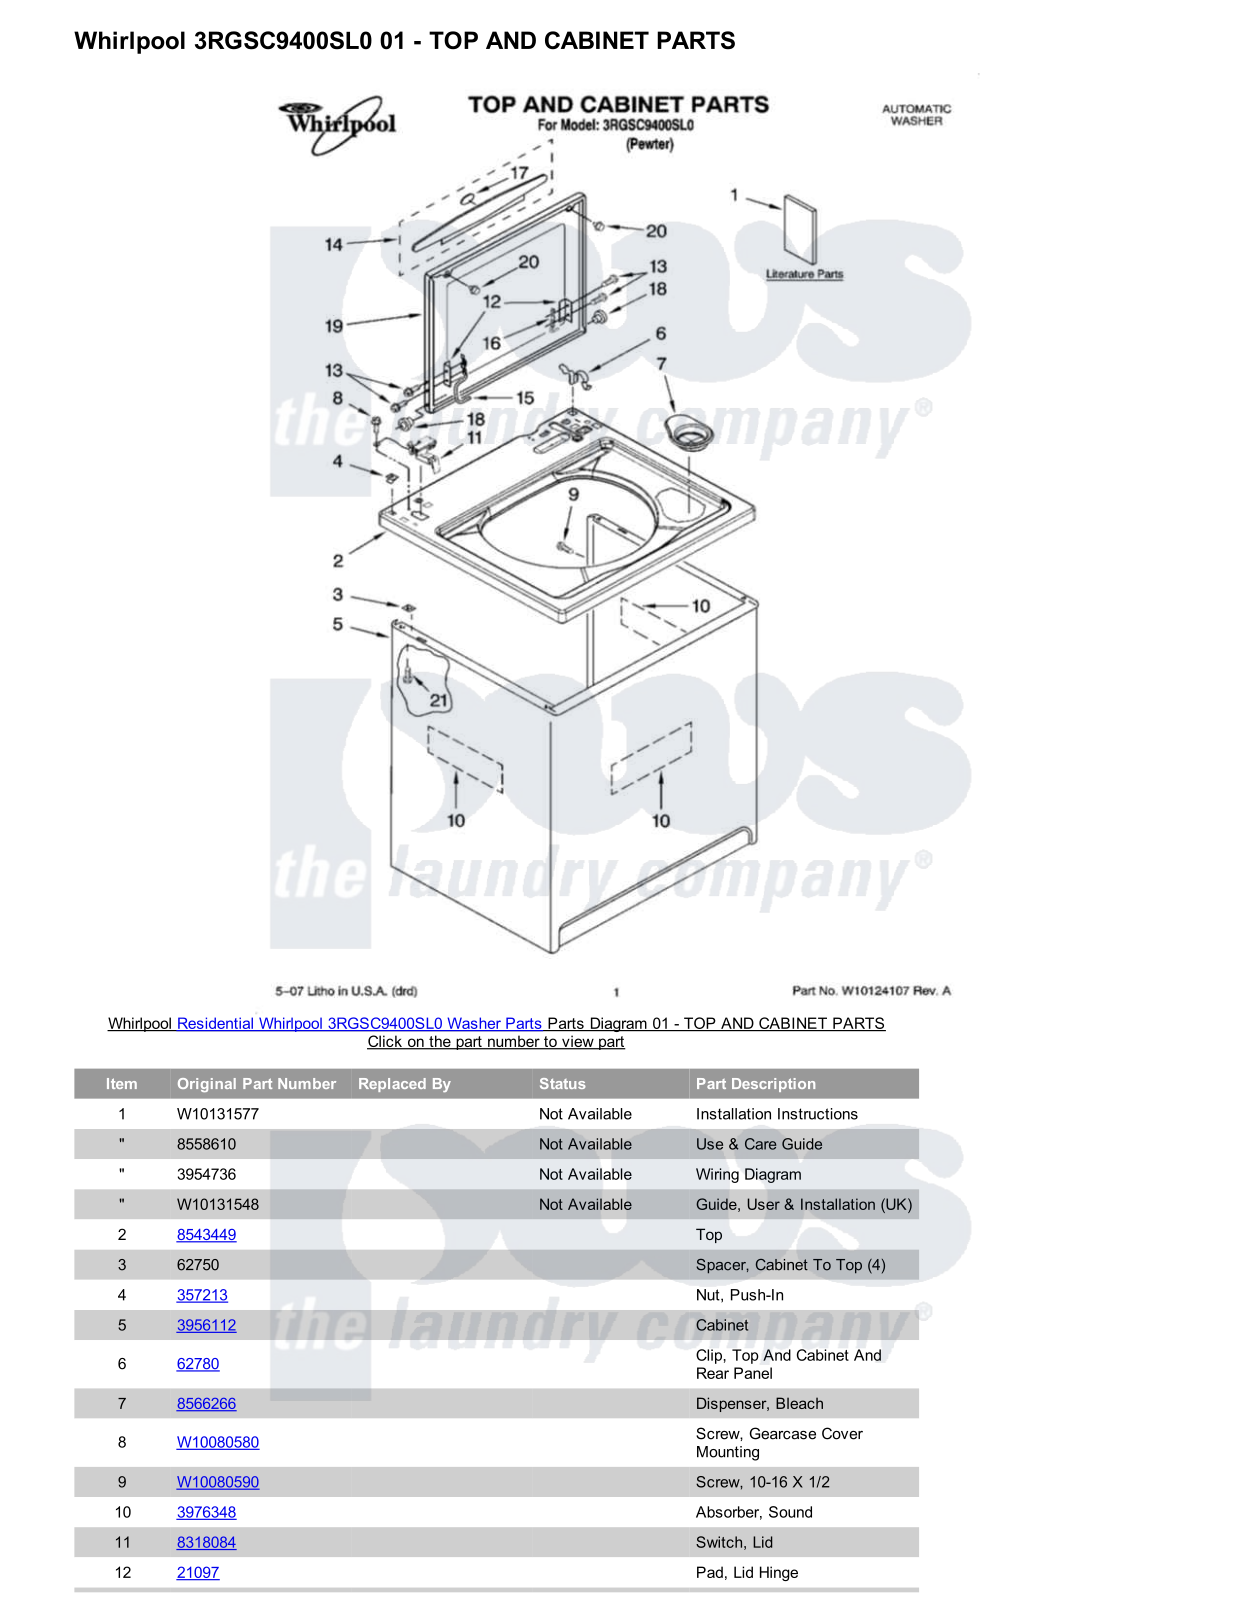 Whirlpool 3RGSC9400SL0 Parts Diagram